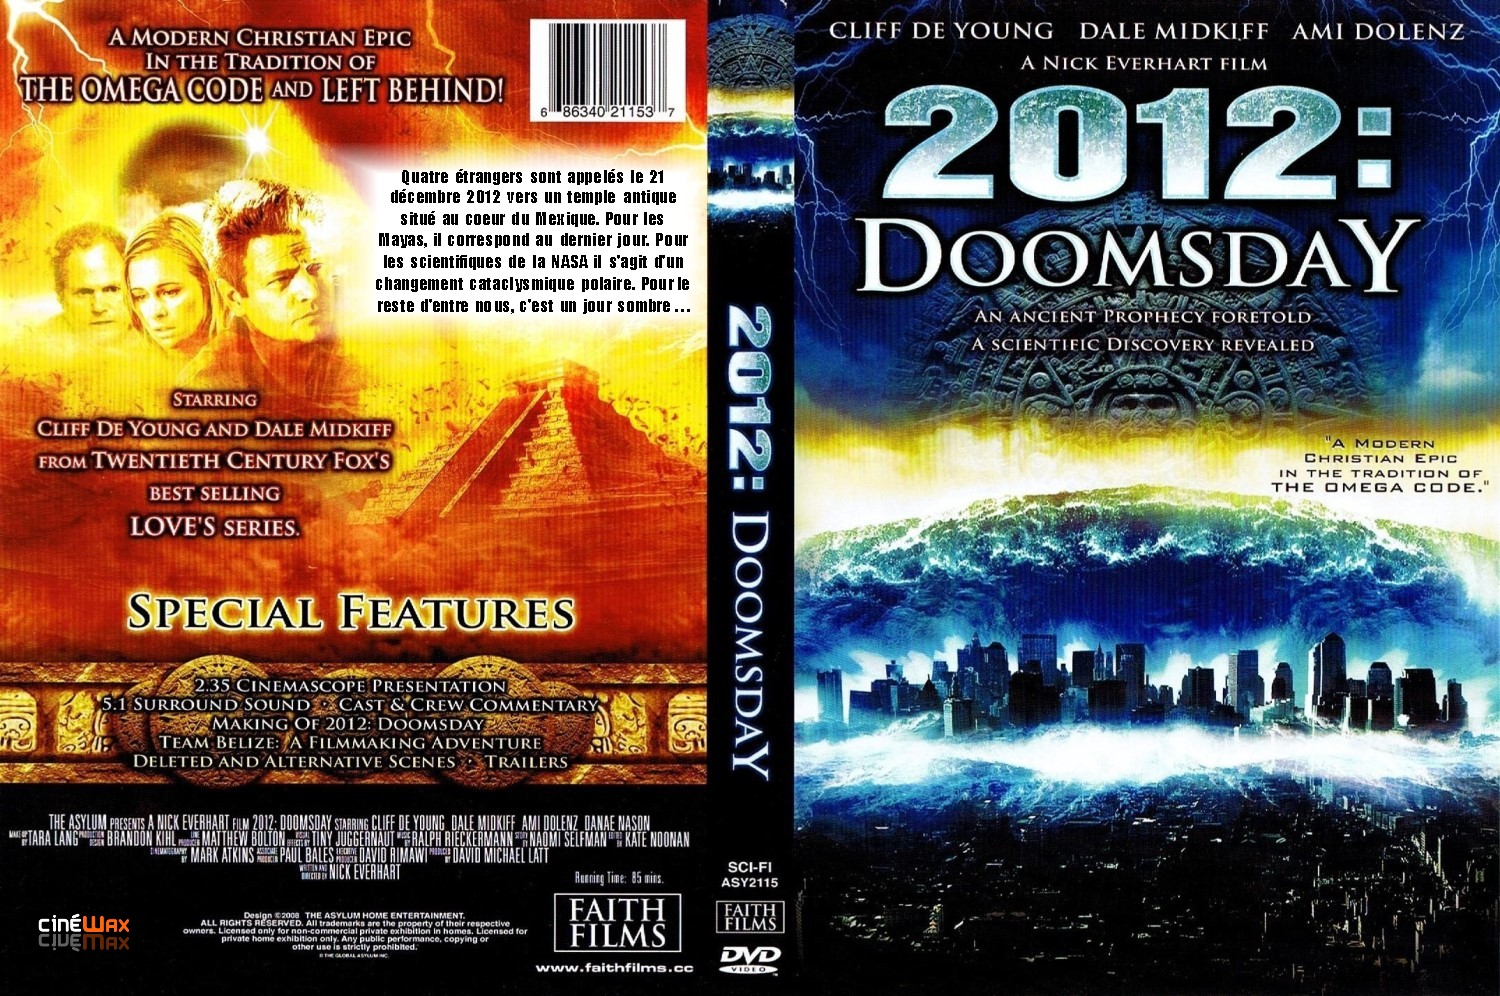 Jaquette DVD 2012 doomsday custom